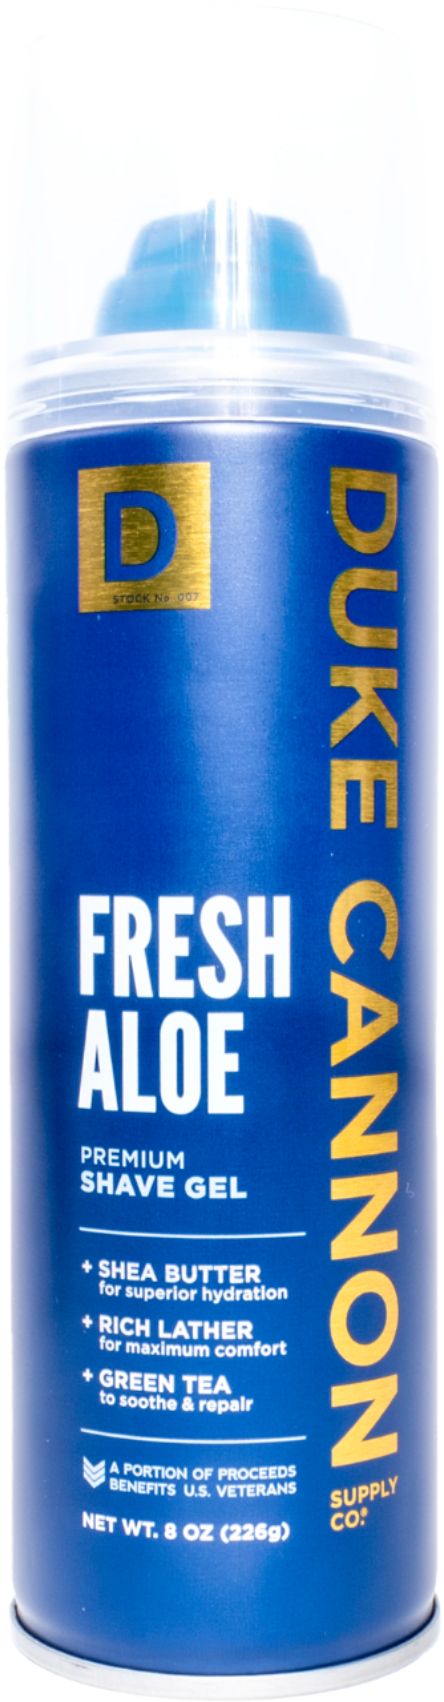 Angle View: Duke Cannon - Fresh Aloe Premium Shave Gel - White